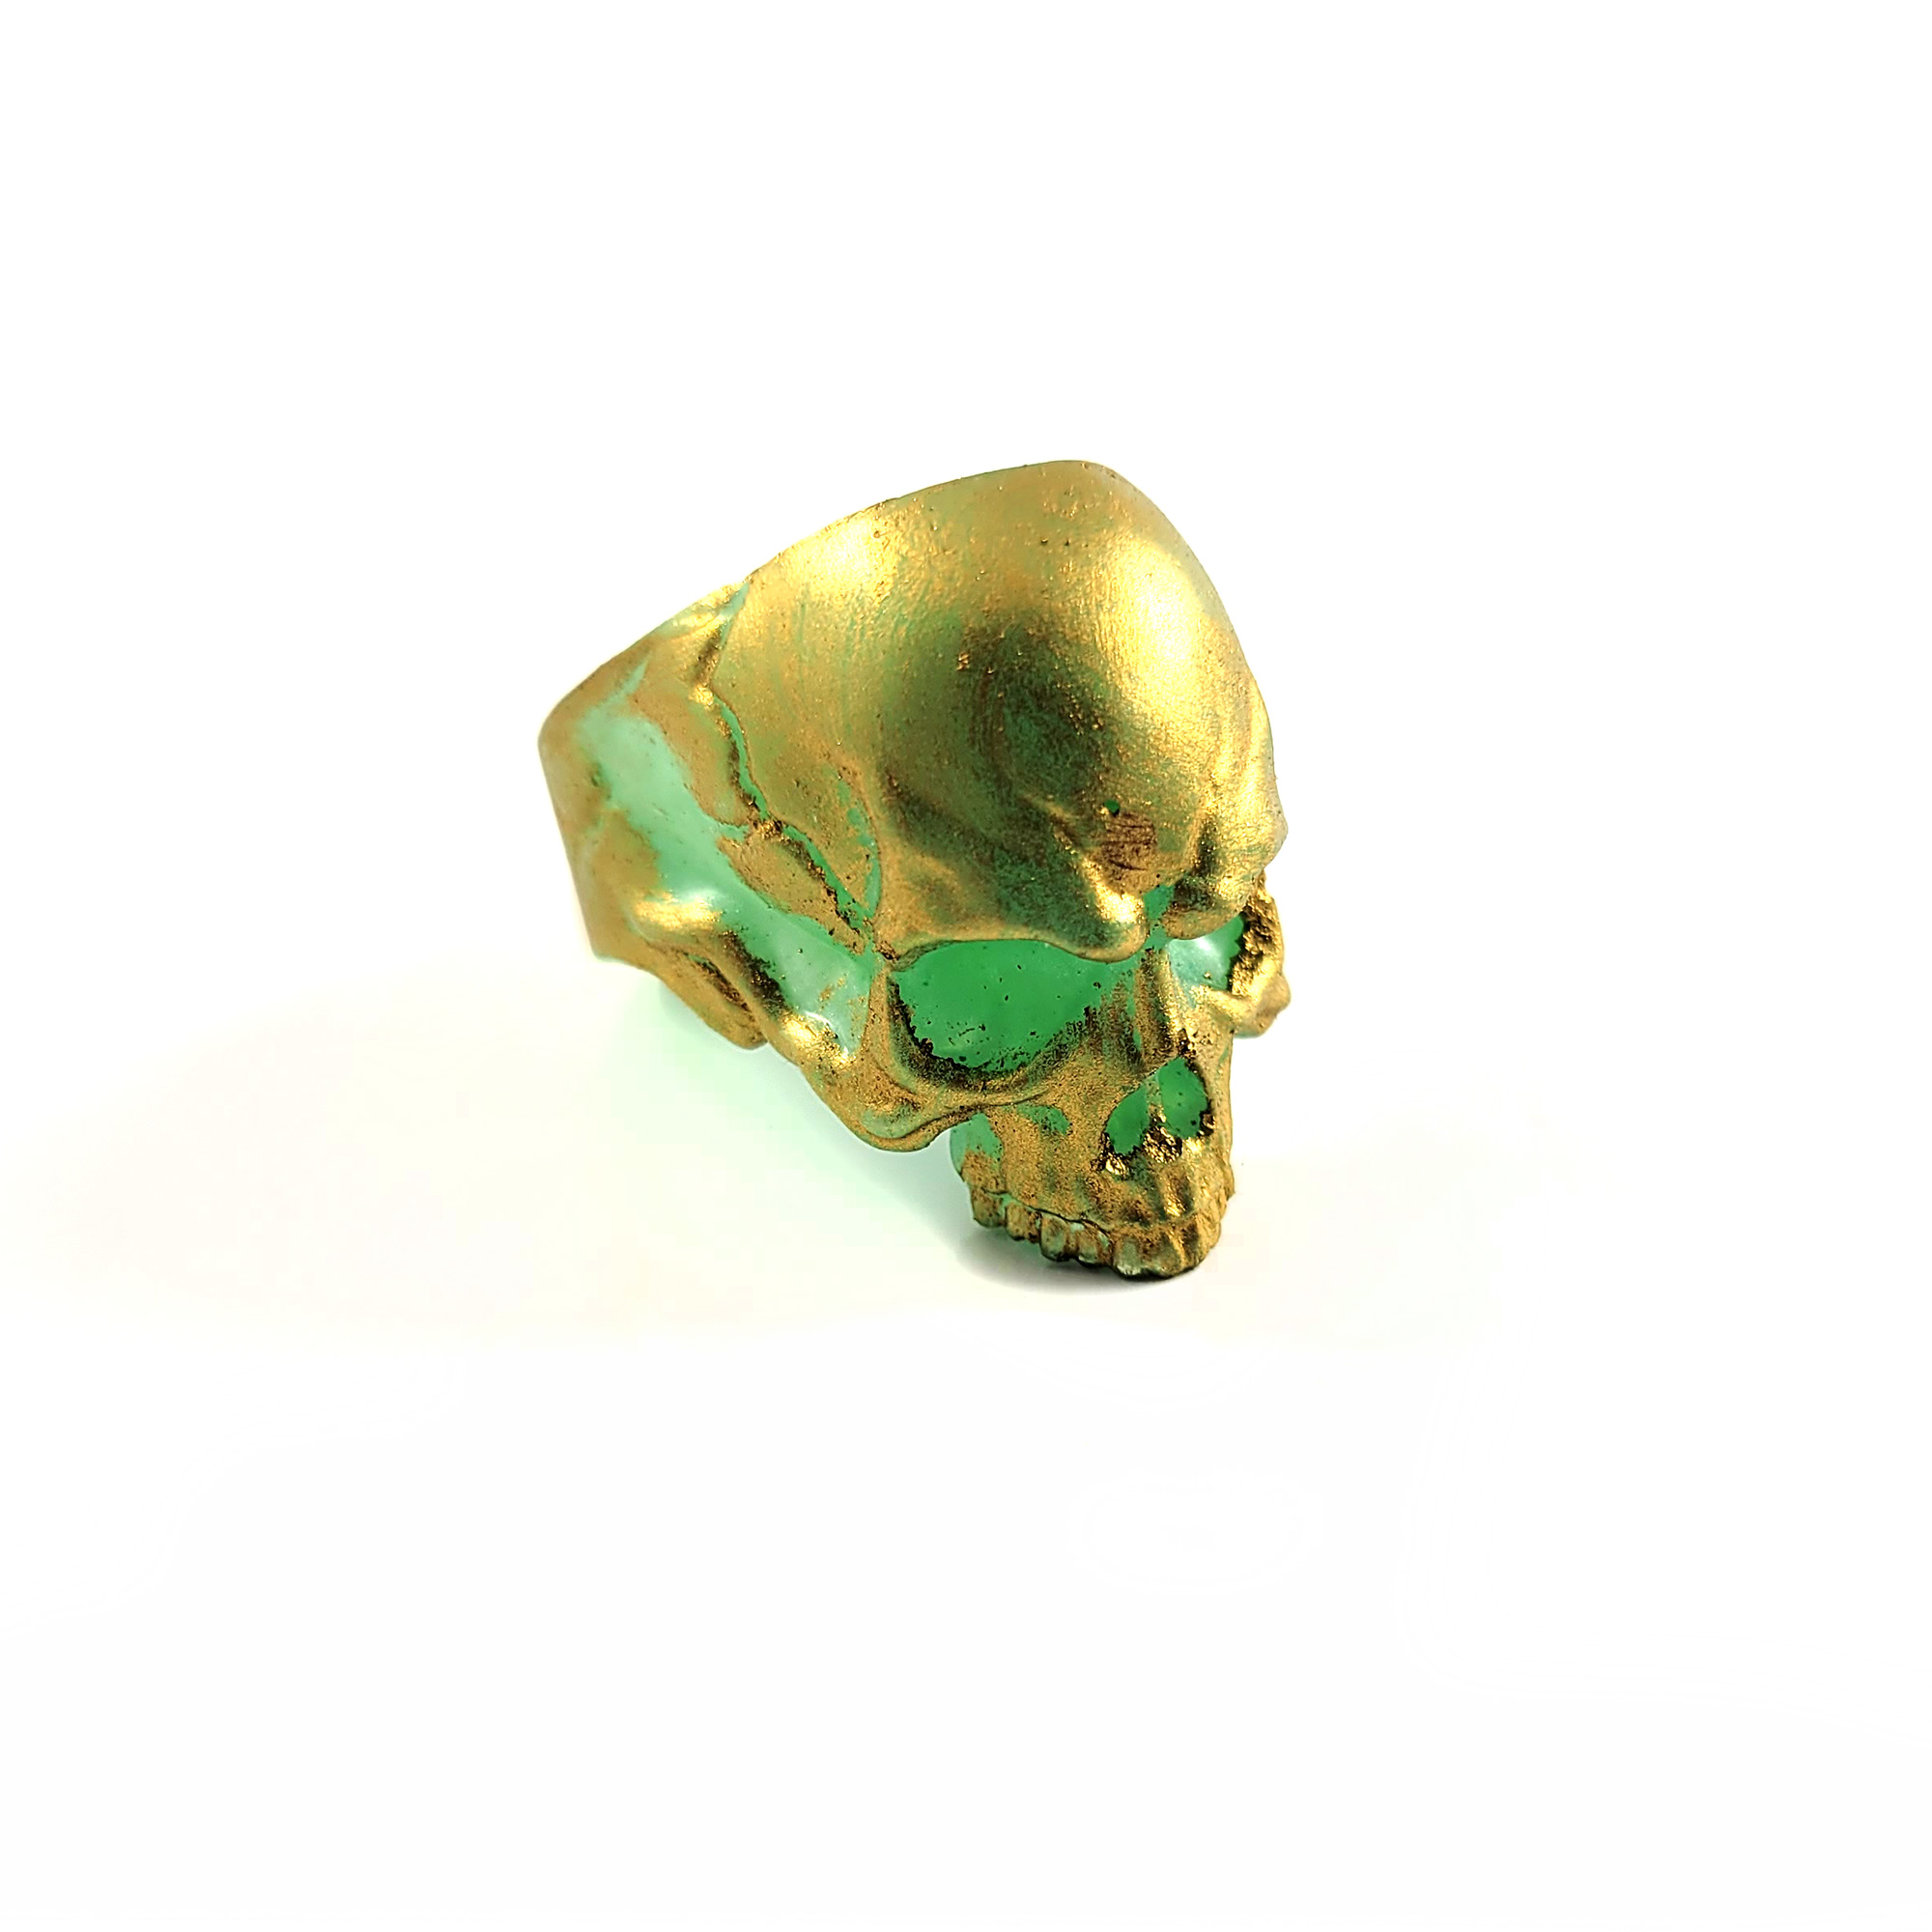 Chunky Skull Rings by Wilde Designs